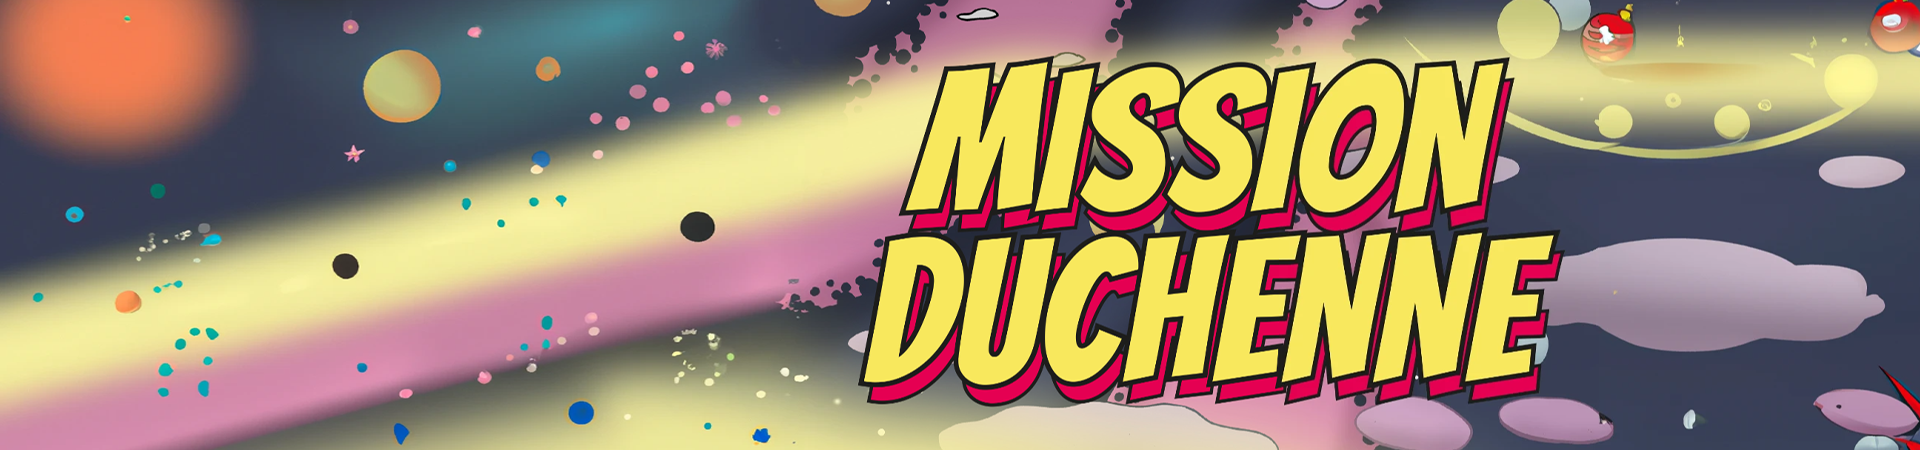 Mission Duchenne comic front cover